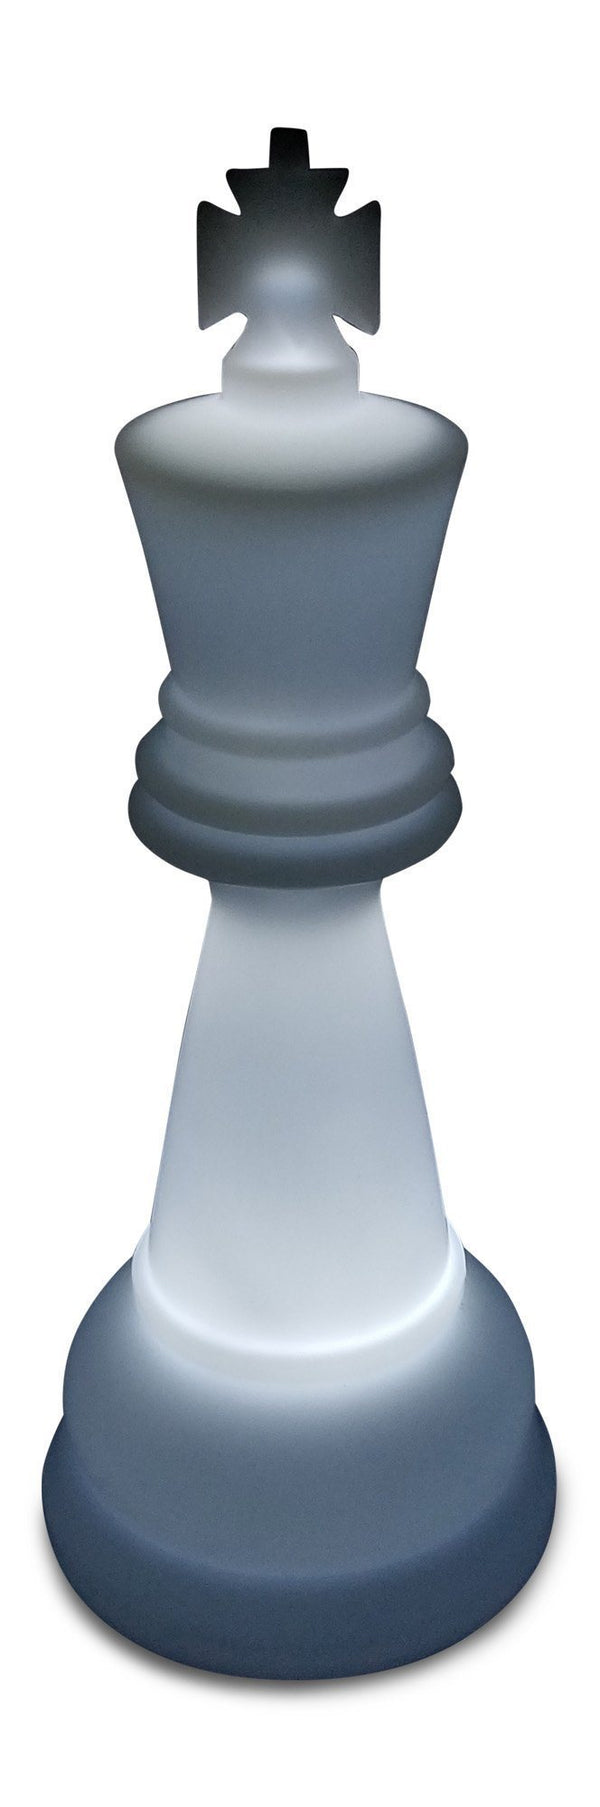 MegaChess 26 Inch Premium Plastic King Light-Up Giant Chess Piece - White |  | GiantChessUSA